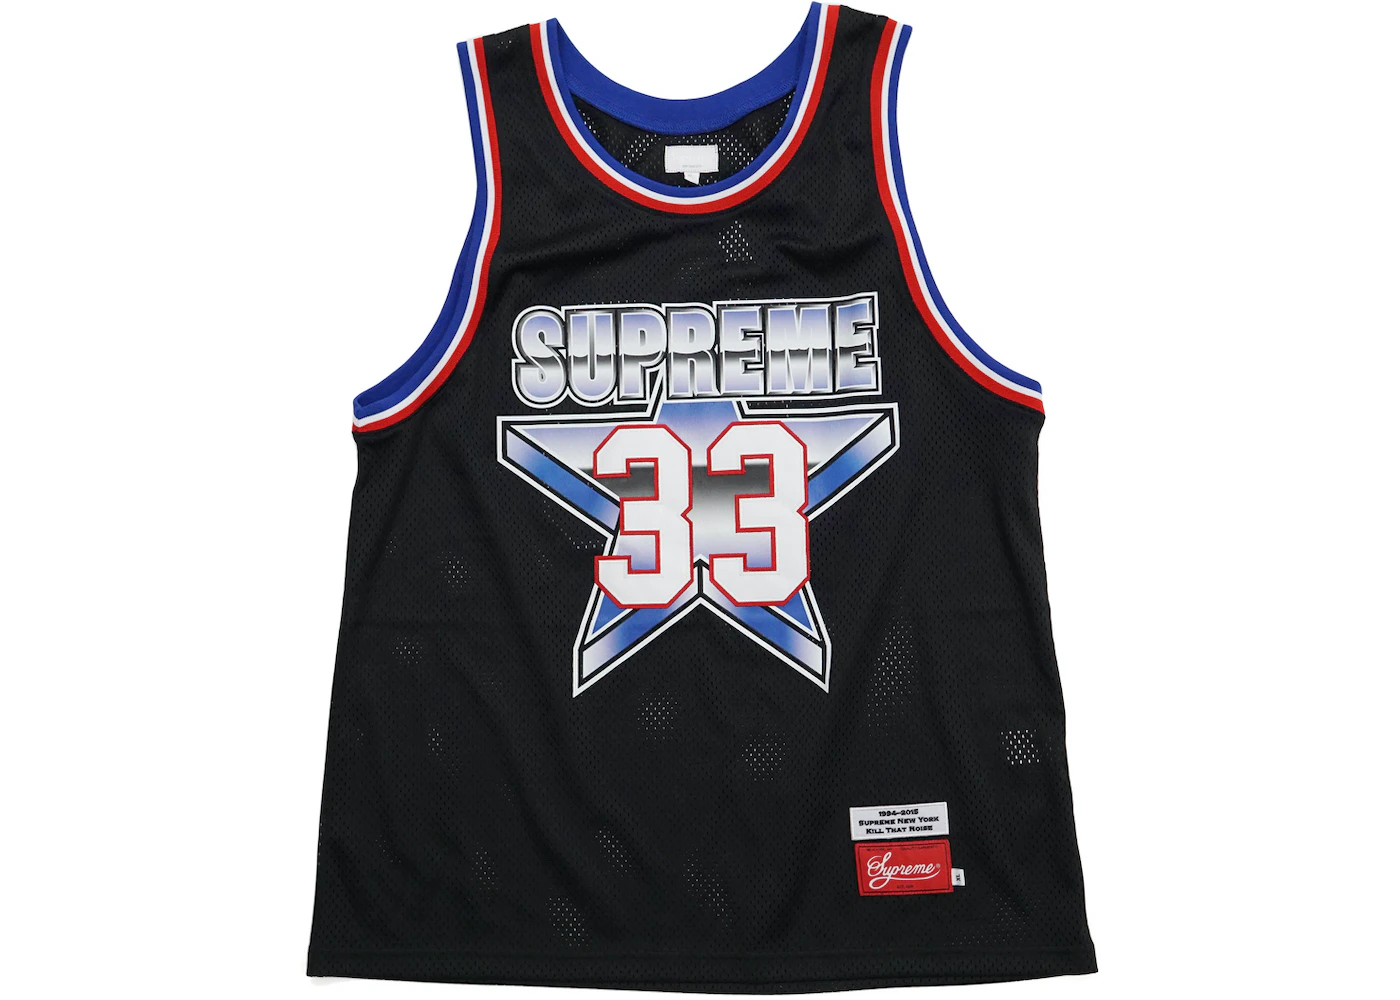 Supreme All Star Basketball Jersey Black Men's - SS15 - US